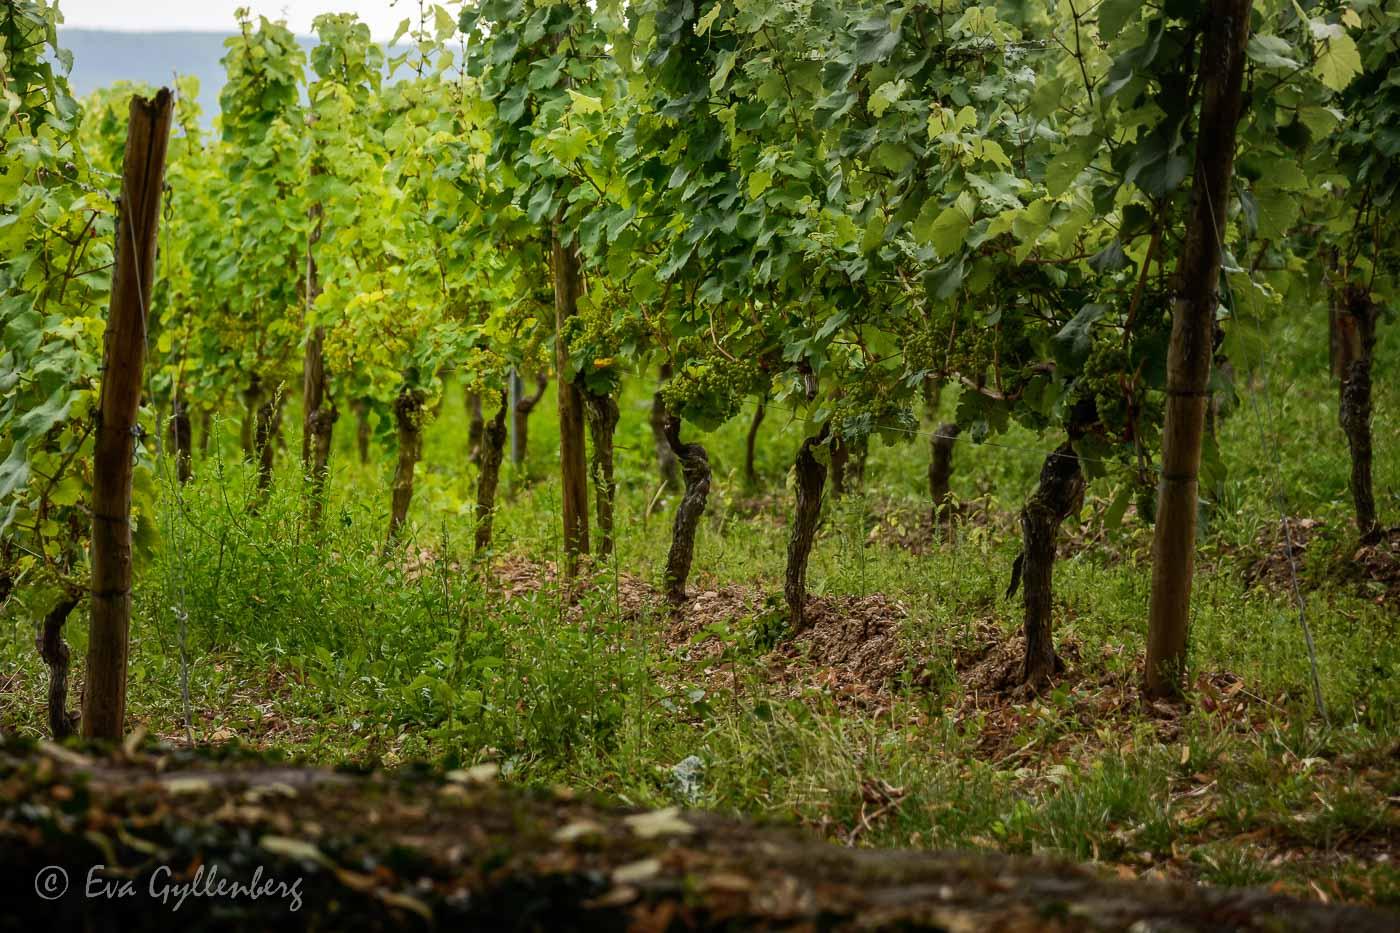 Viniculture in macro view